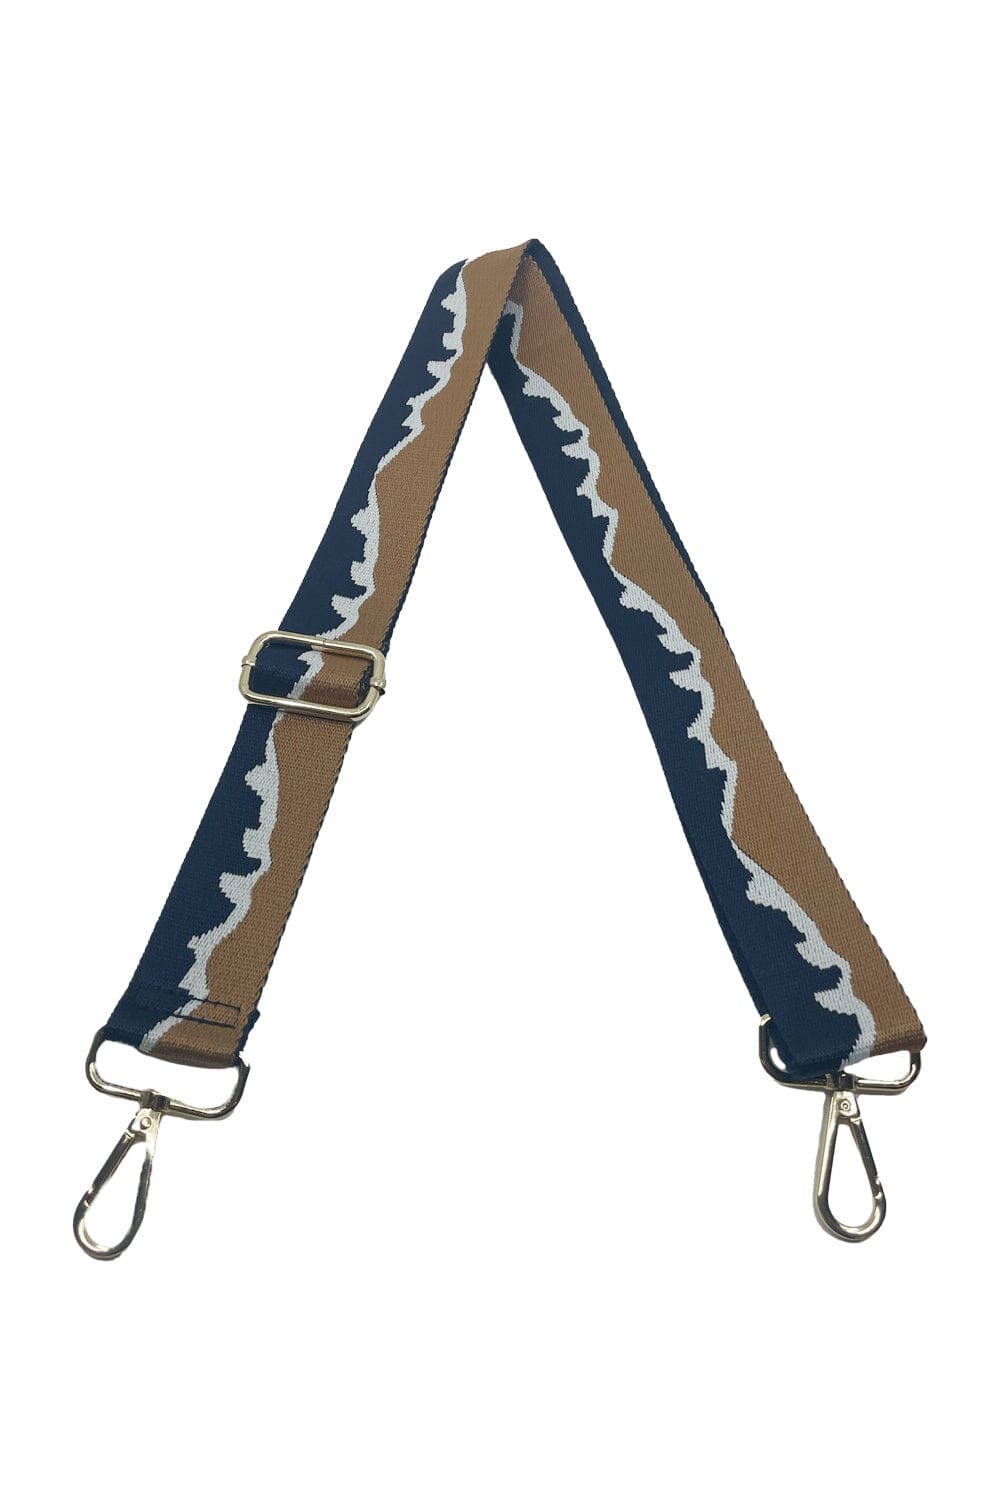 Shiloh Bag Strap Navy/ Camel Accessories